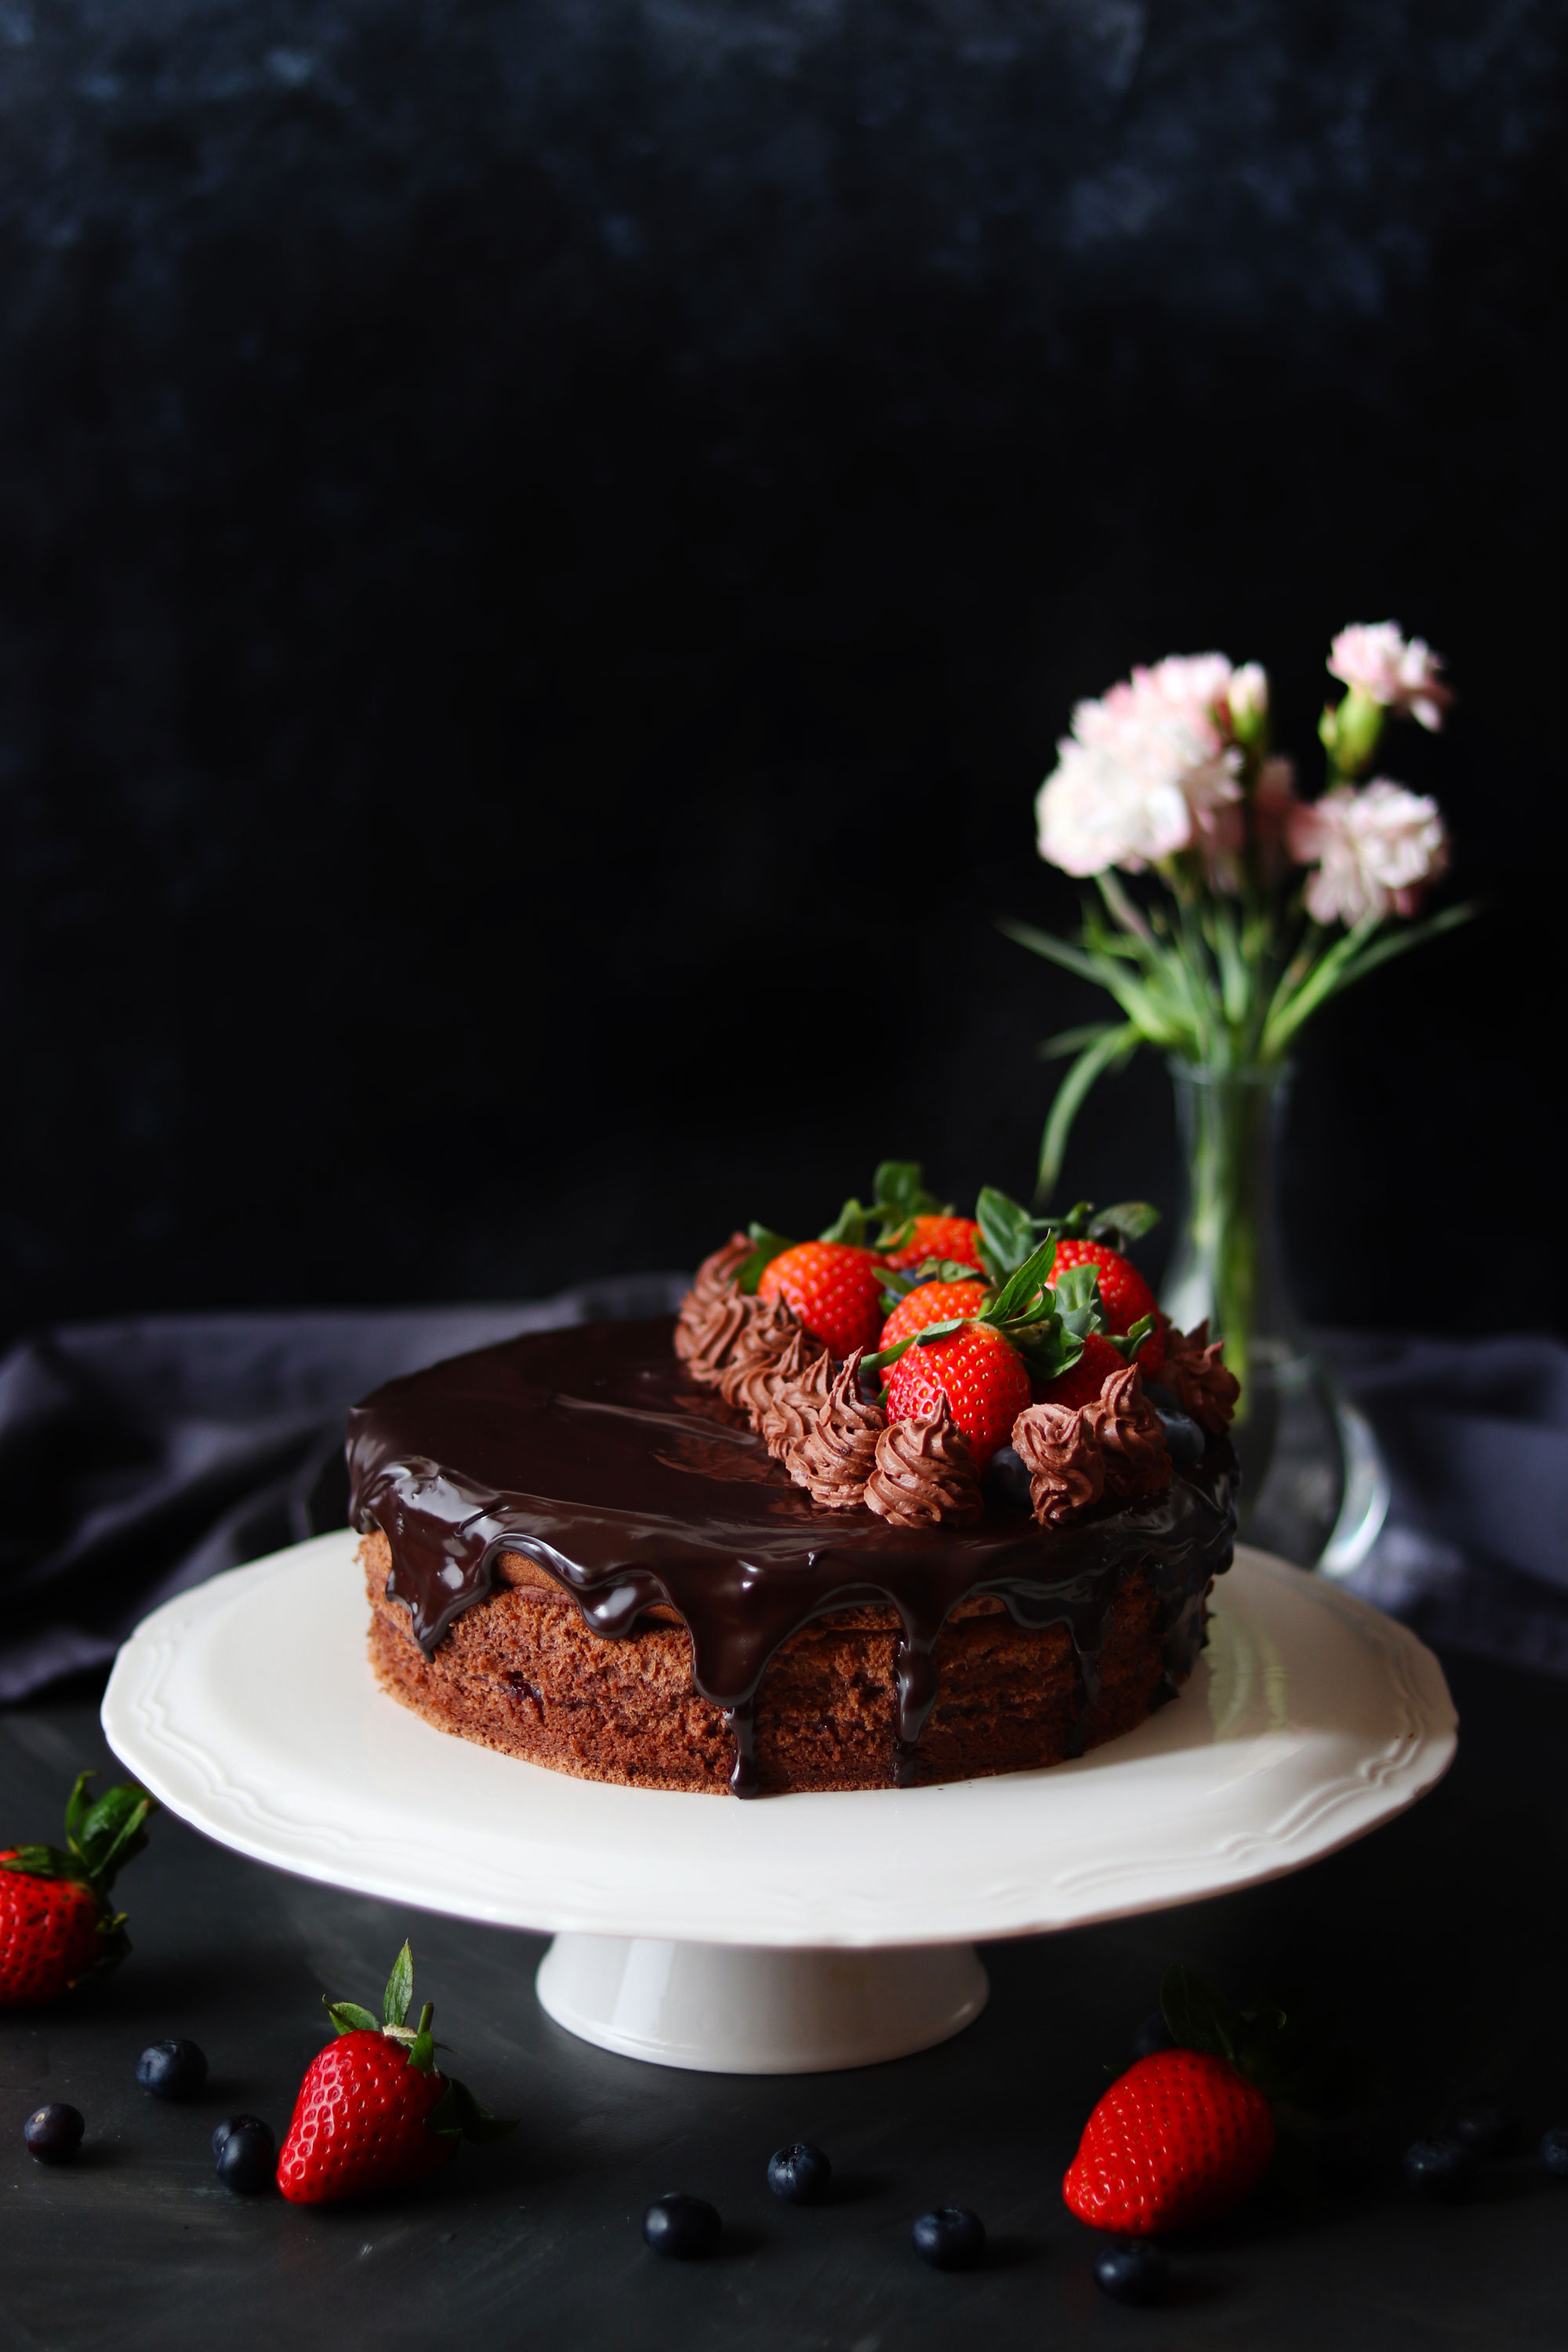 Chocolate chiffon cake, mocha frosting & dark chocolate ganache